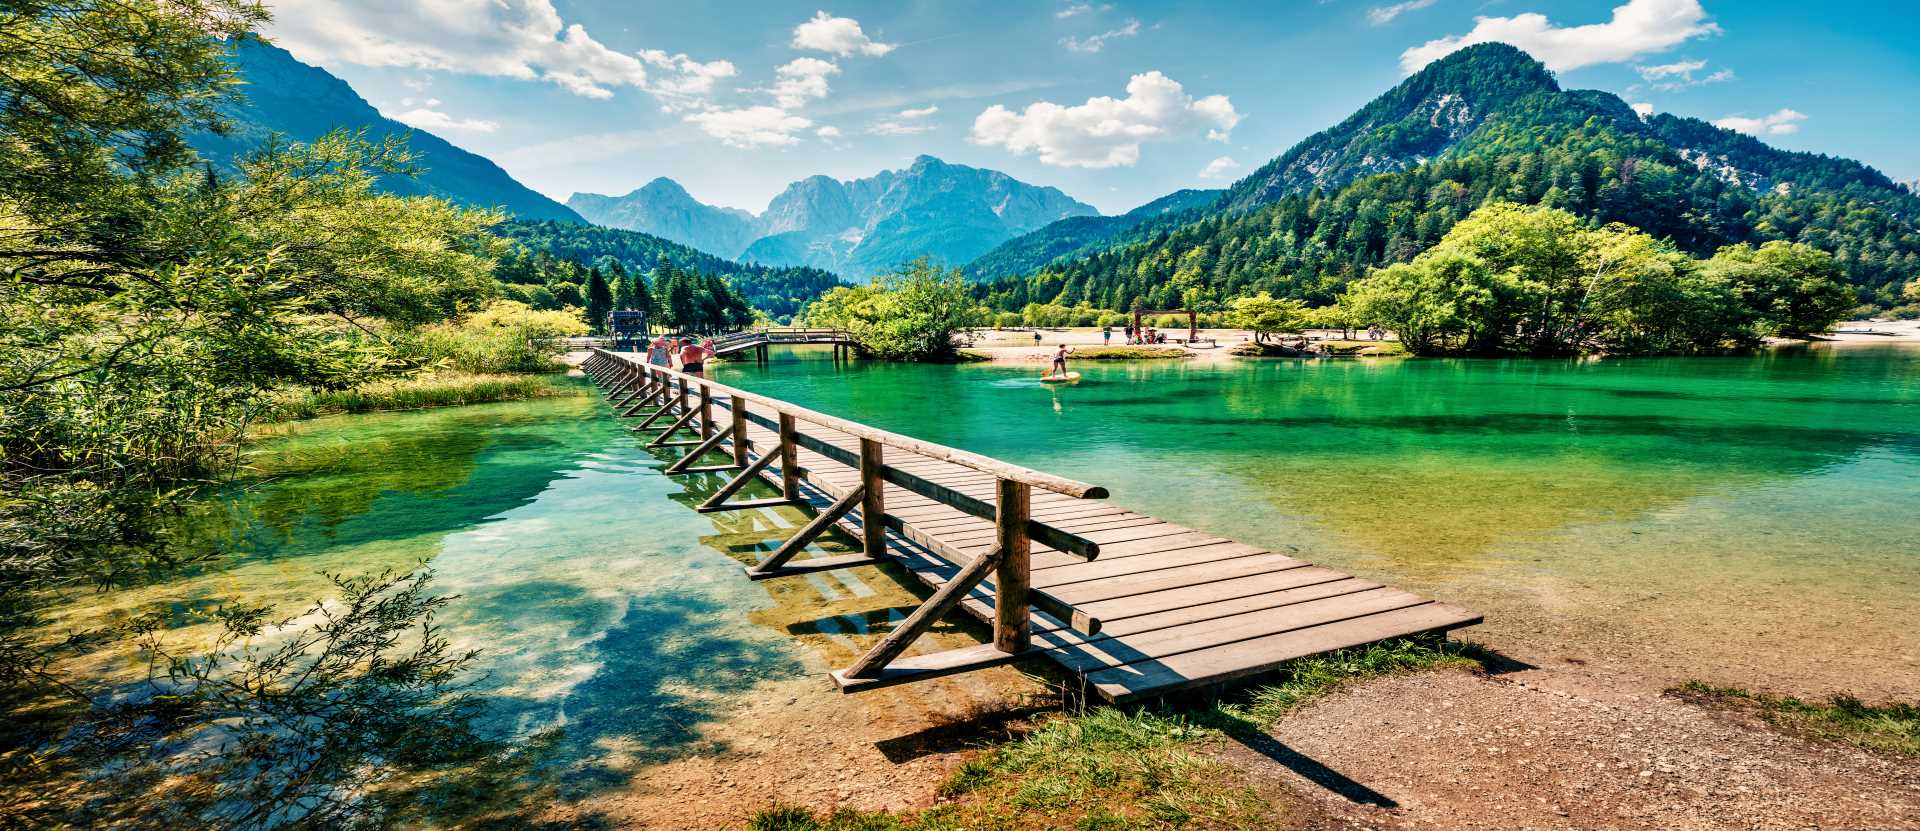 Jasna-See, Julische Alpen, Triglav-Nationalpark, Gozd Martuljek, Slowenien - Campingplätze in Slowenien